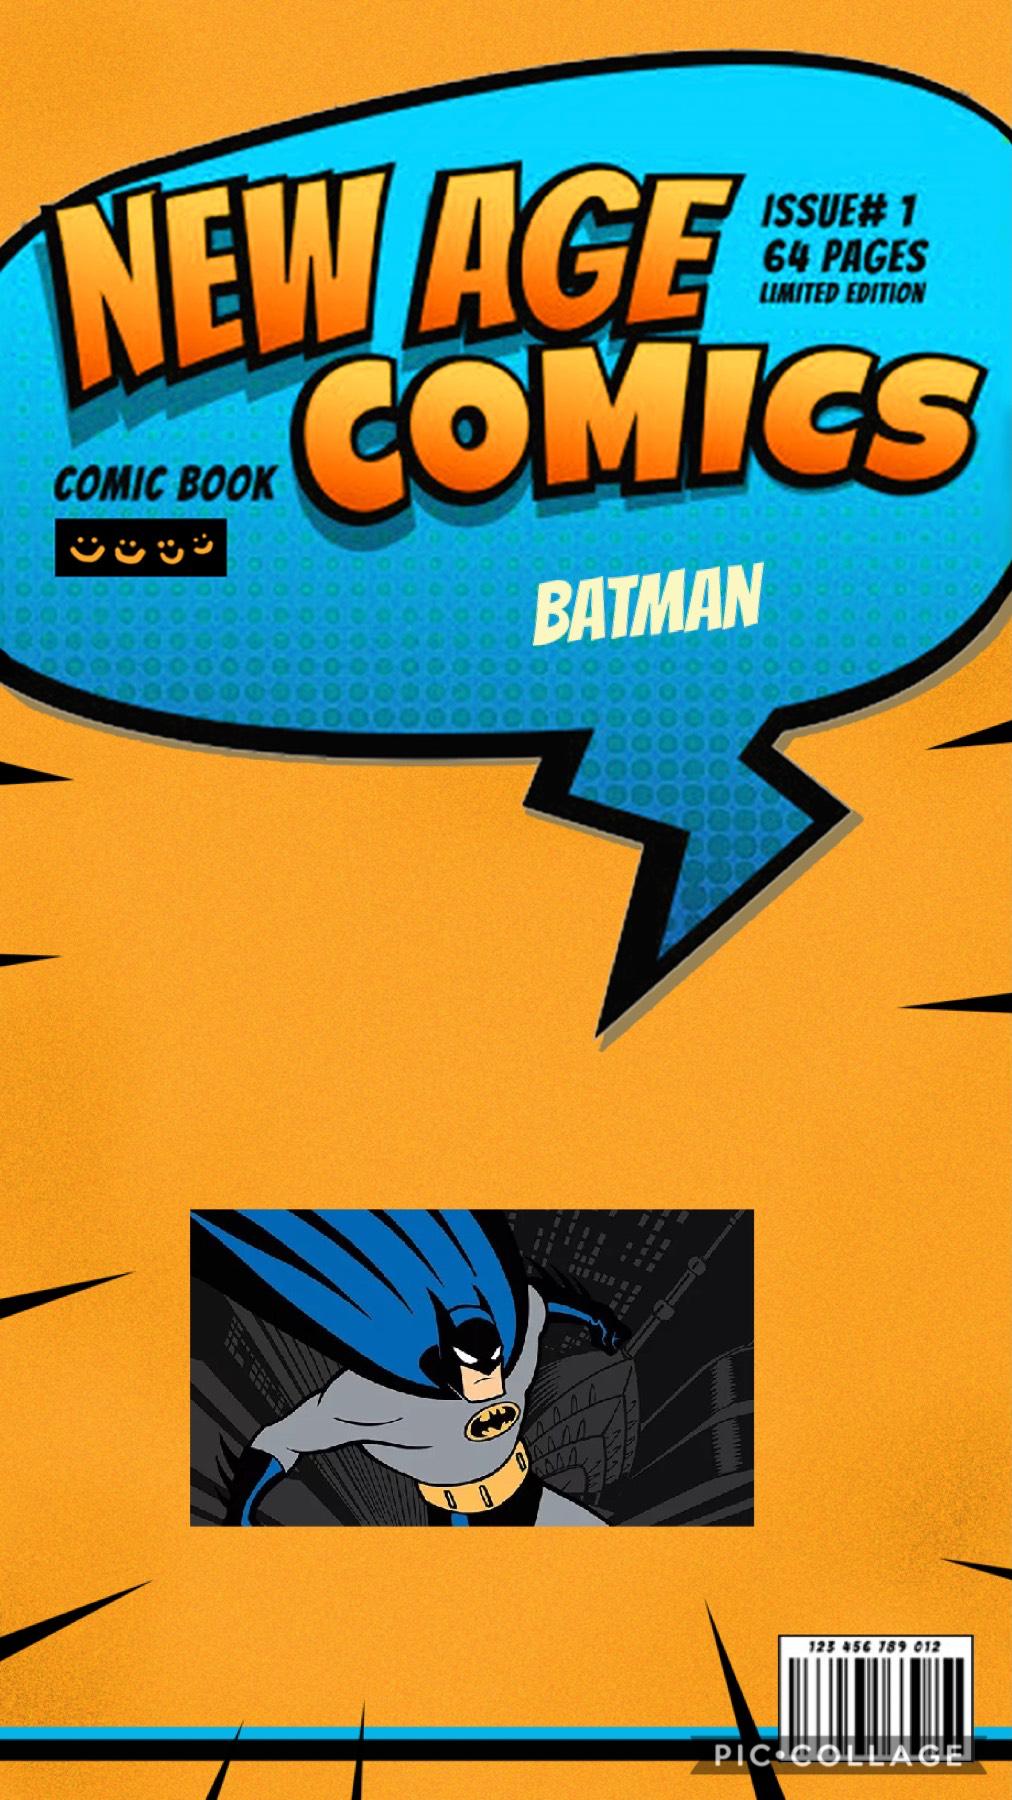 #Batman
Love batman
Batman is the best superhero 
